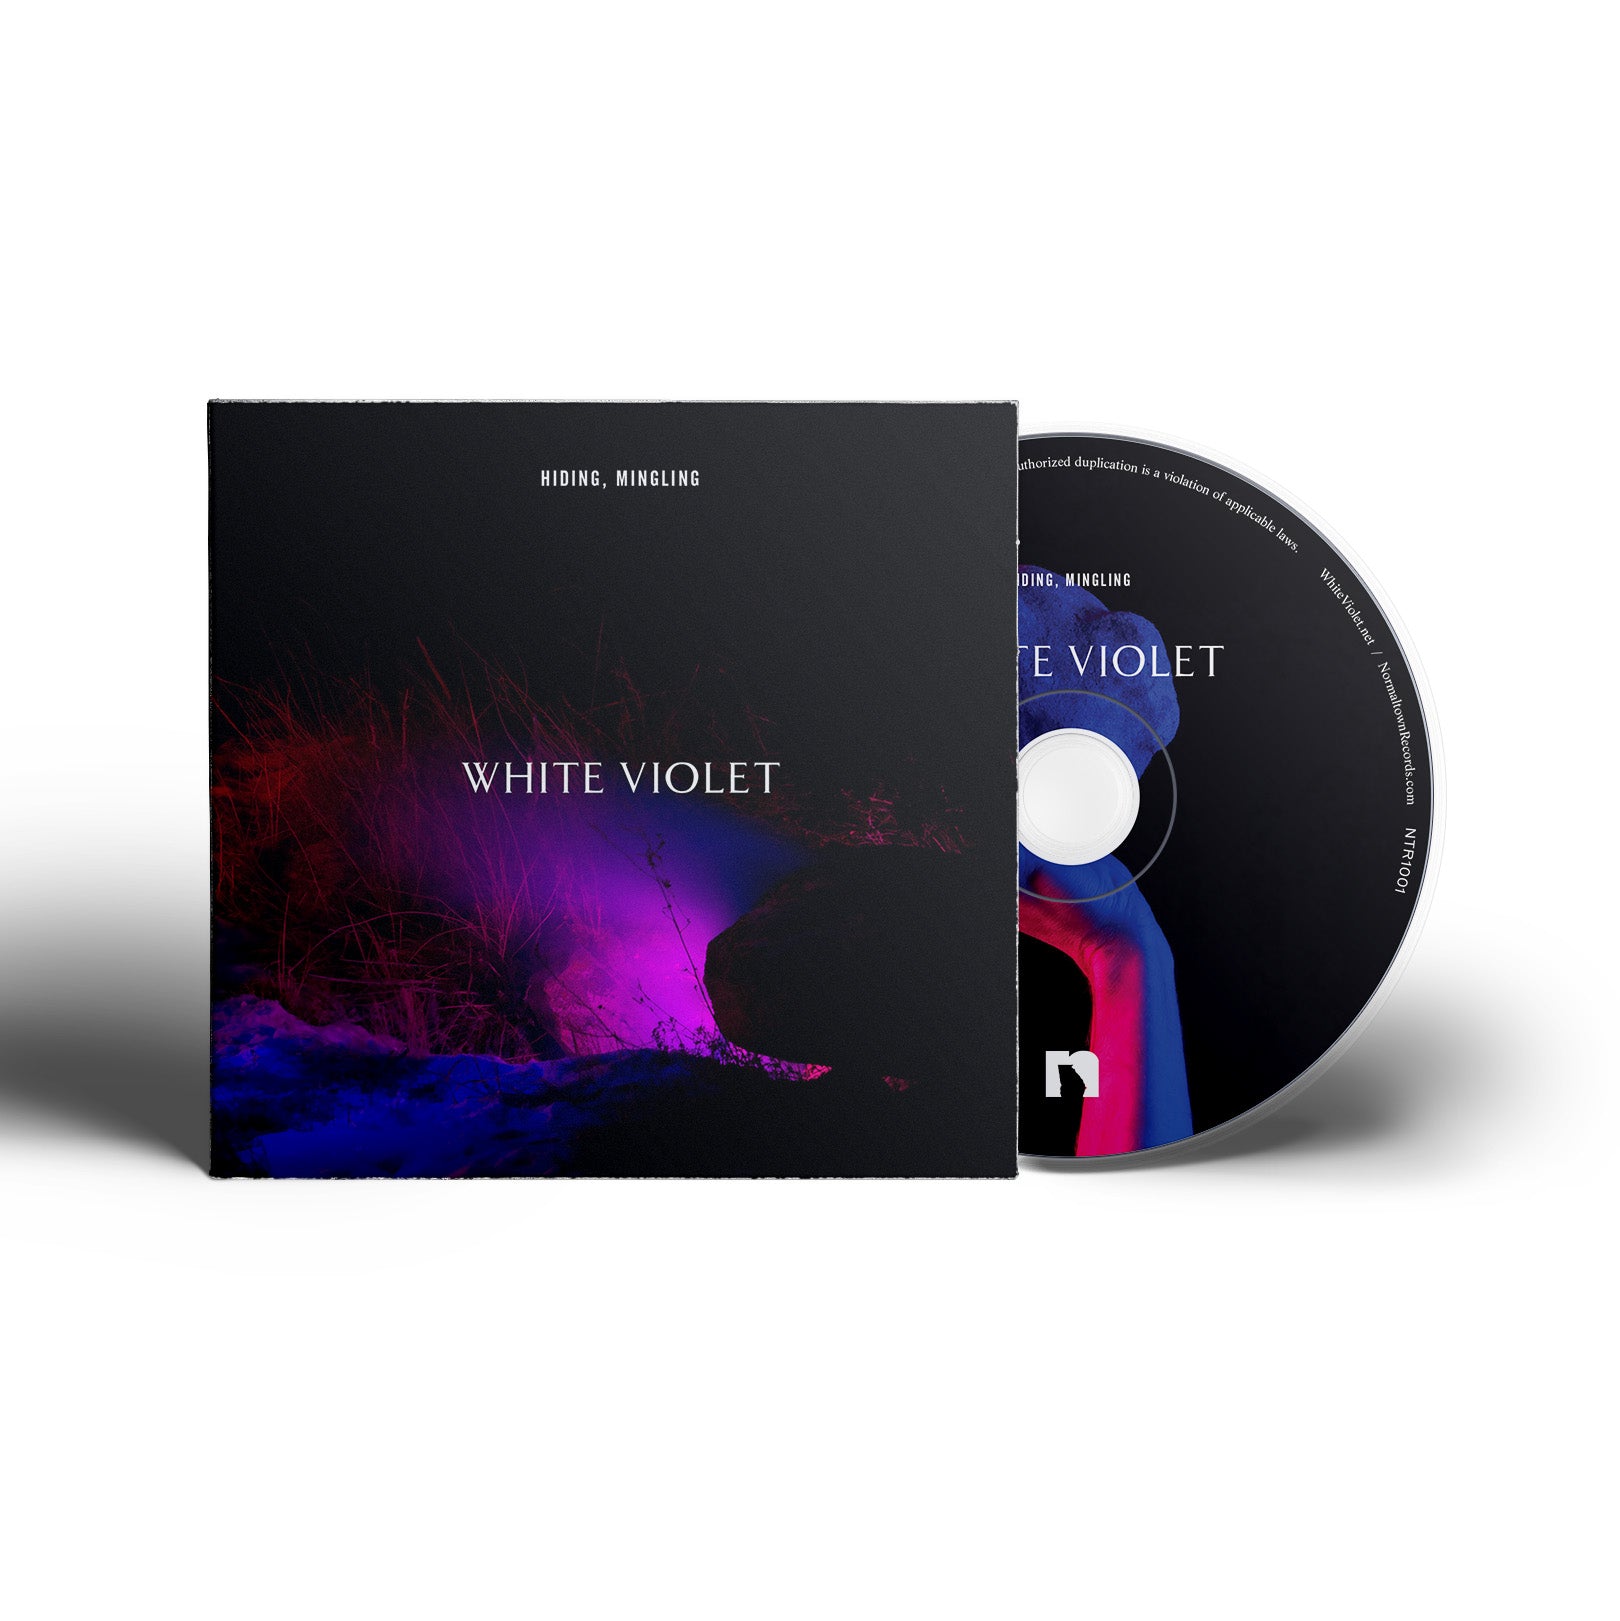 White Violet - Hiding, Mingling [CD]